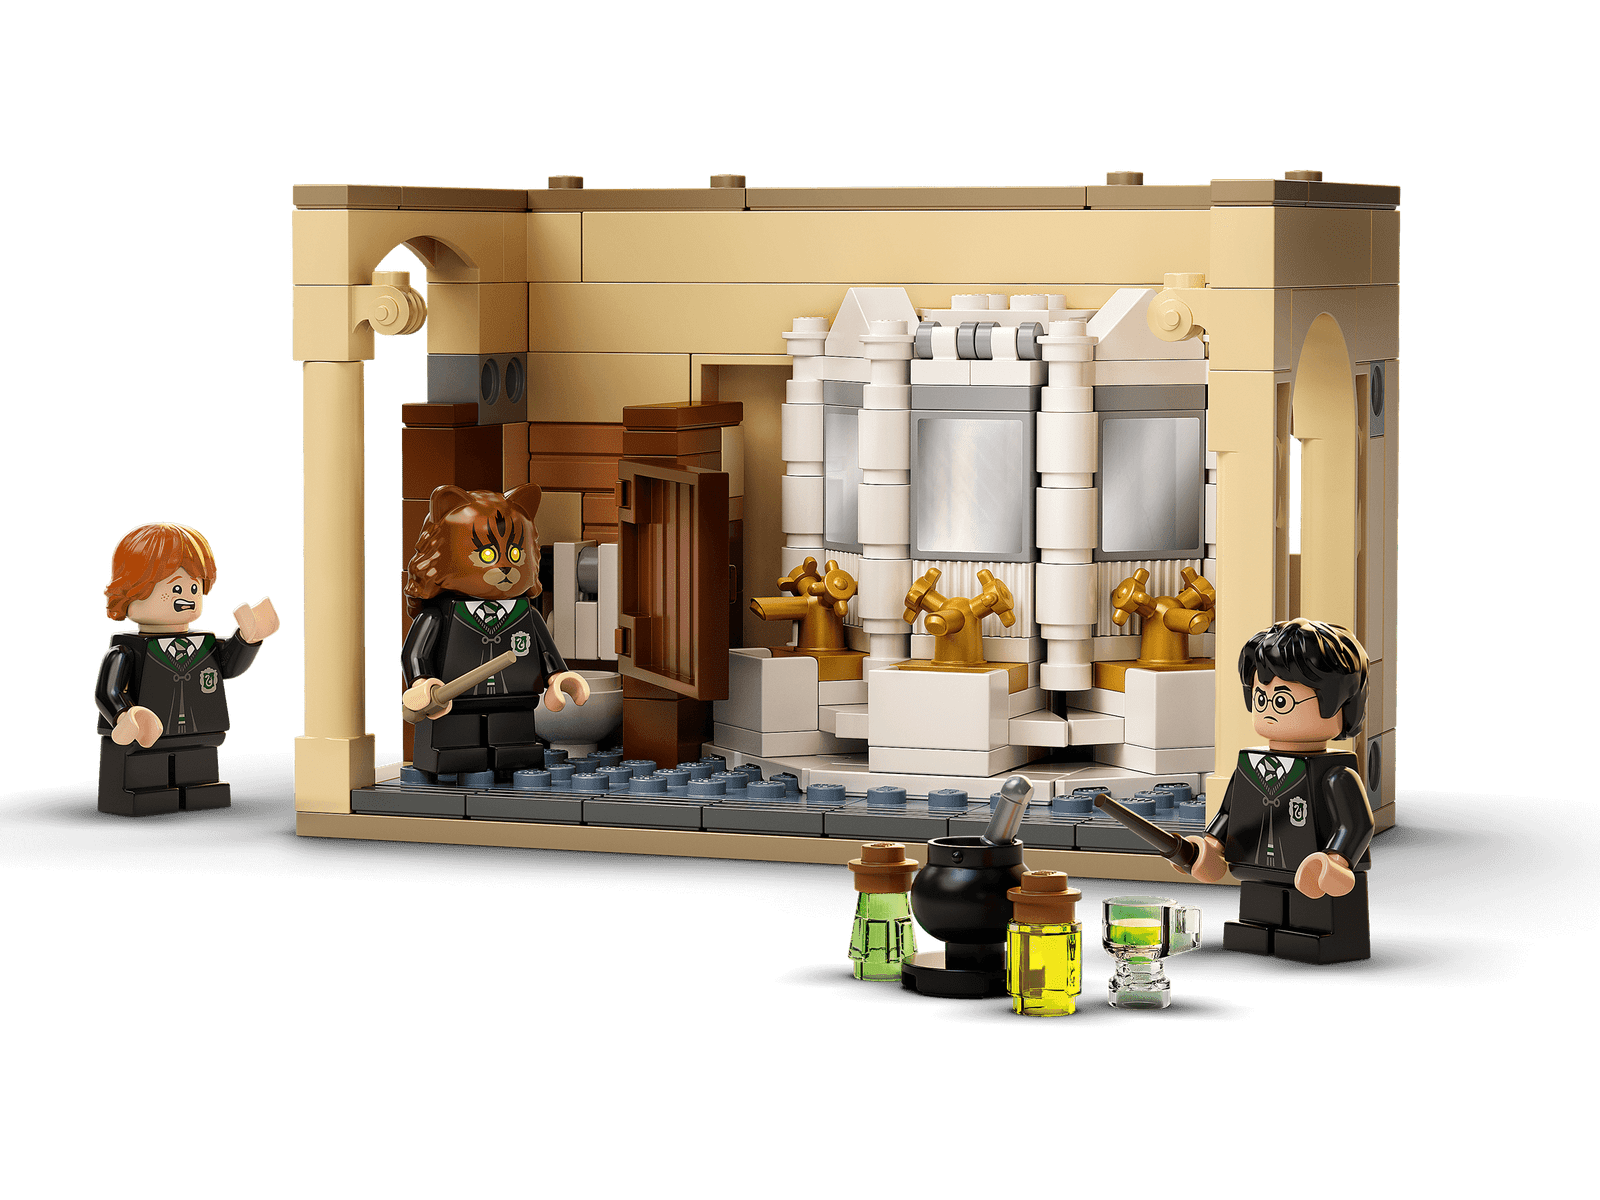 Lego Harry Potter Hogwarts: Polyjuice Potion Mistake 76386